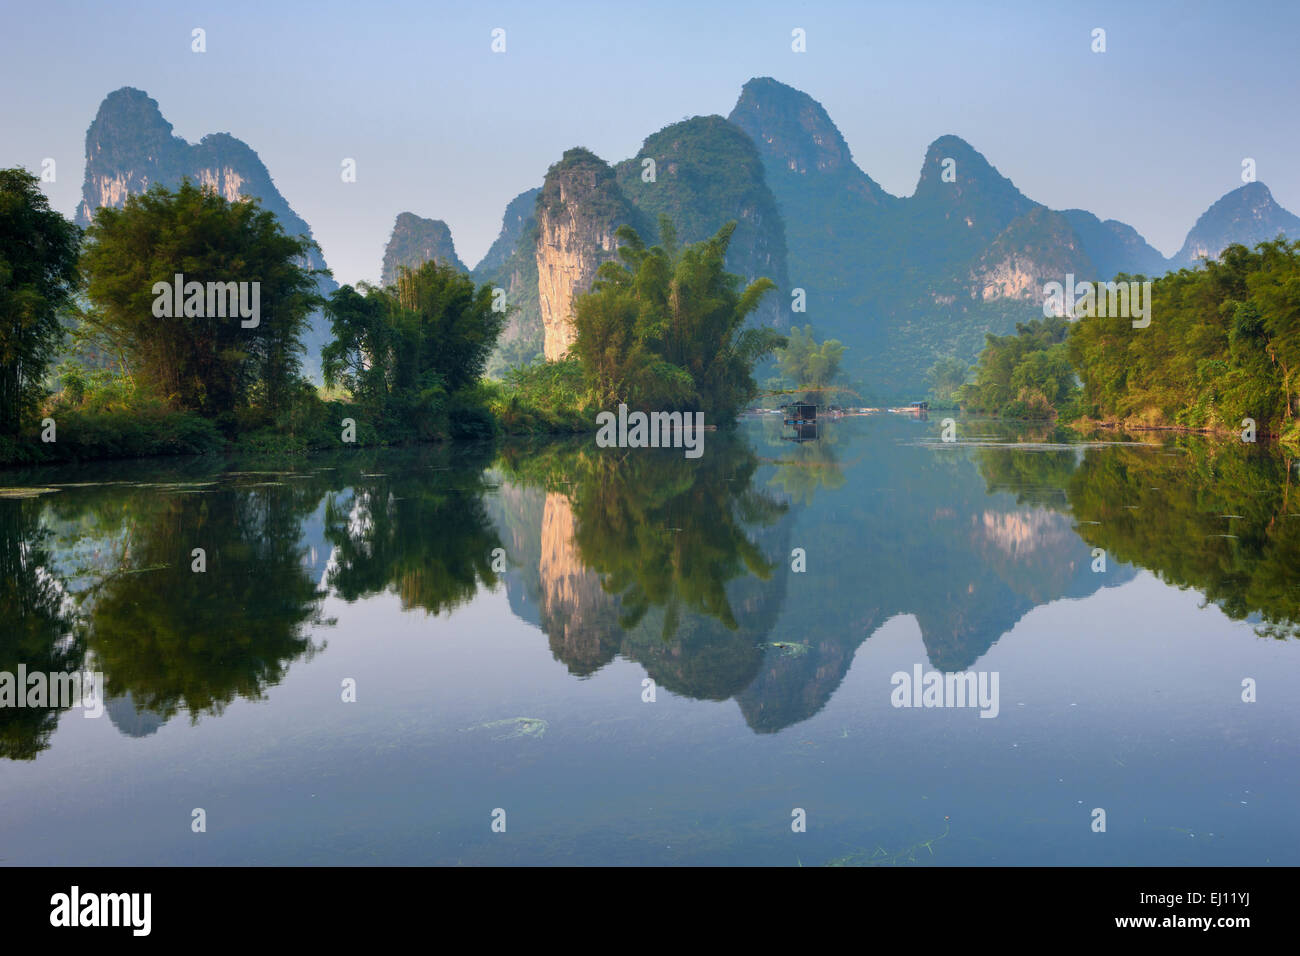 Yulong River, China, Asia, region, Guangxi, river, flow, mountains, karst, scenery, reflection, morning light Stock Photo